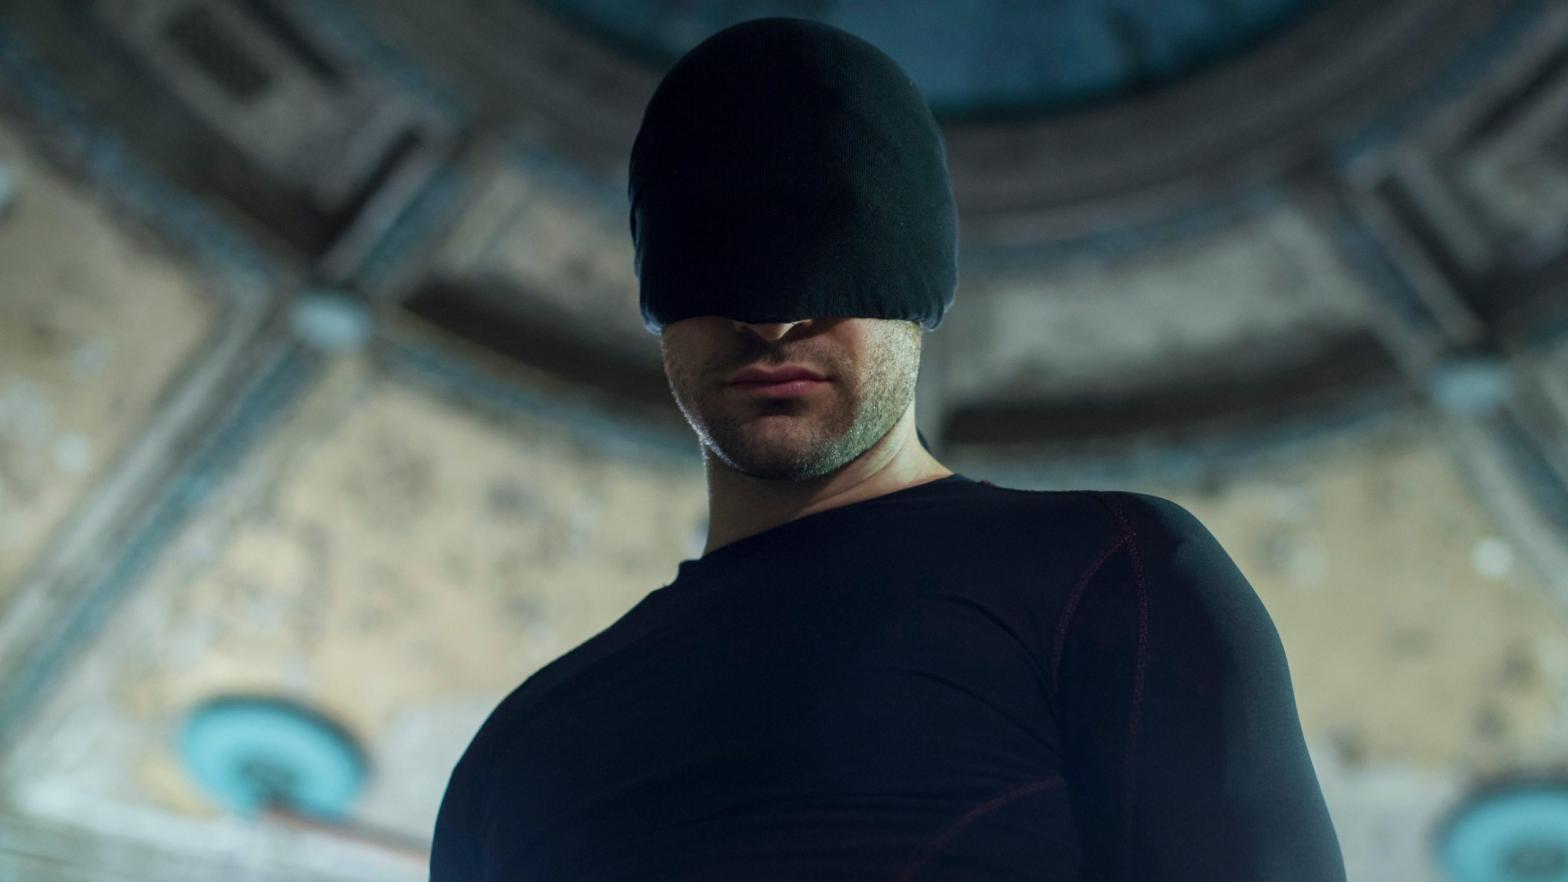 Matt Murdock in his first vigilante costume in the first season of Netflix's Daredevil. (Image: Netflix)